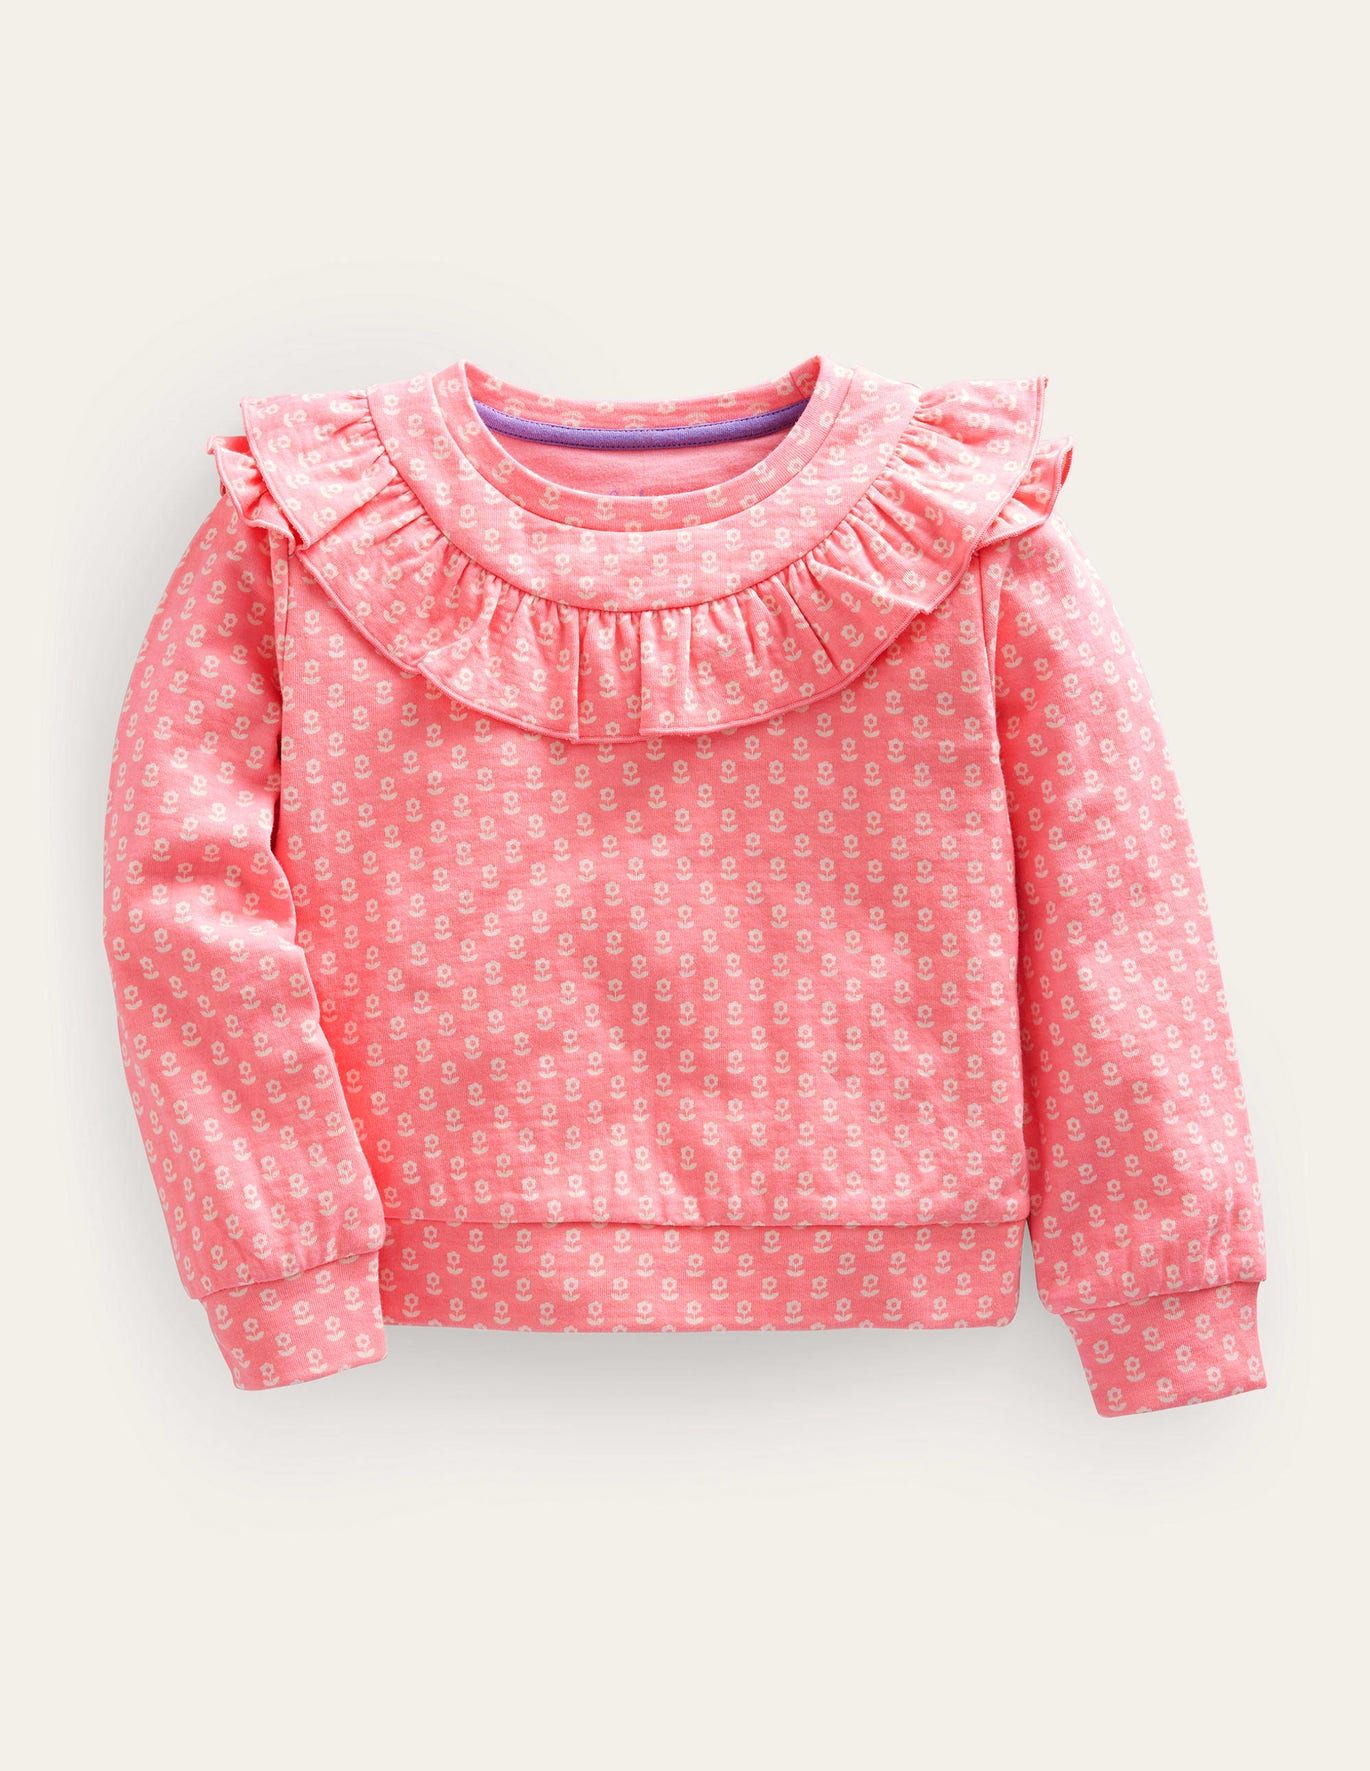 Boden Frill Sweatshirt - Crab Apple Pink Floral